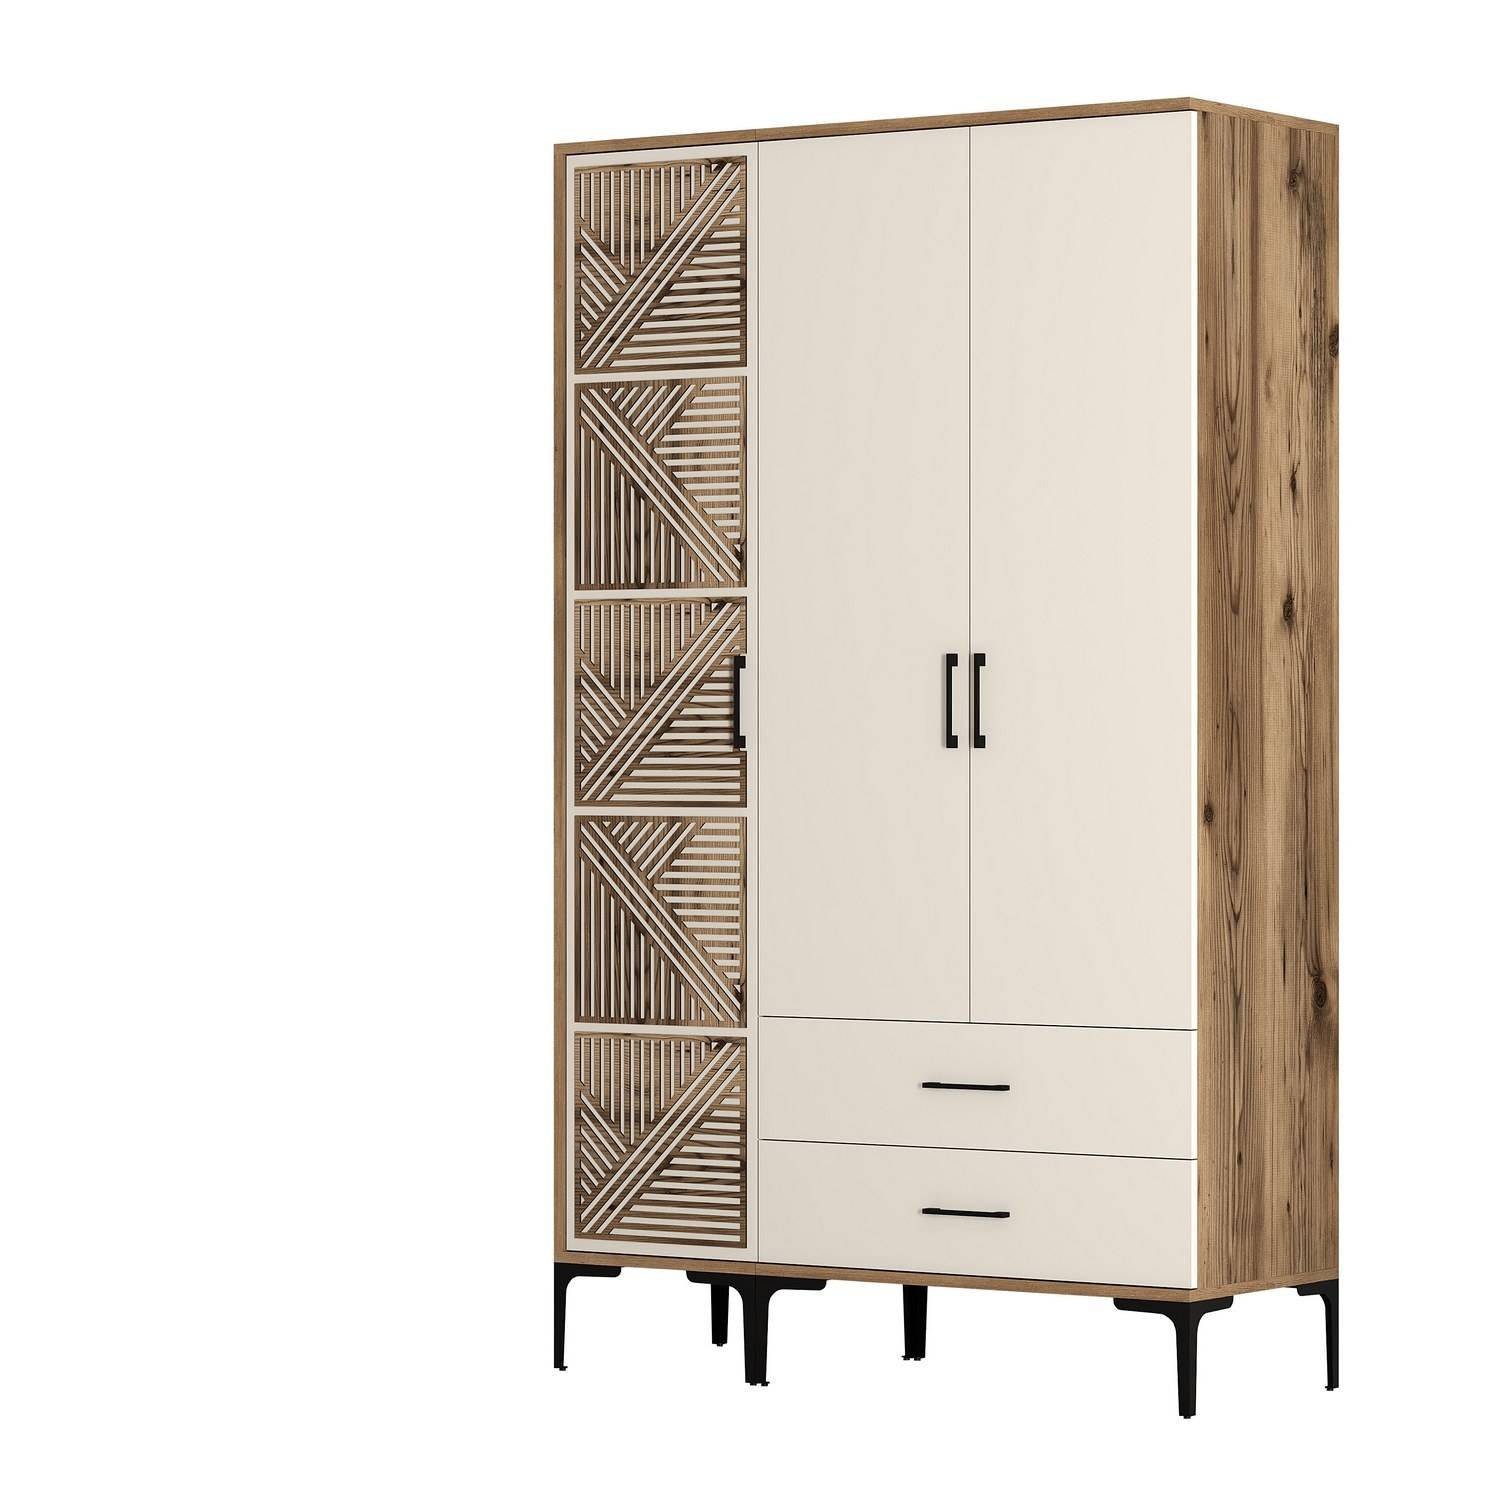 Akay kledingkast in industriële stijl met deuren met geometrisch patroon en 2 laden L120cm Donker hout en crèmewit